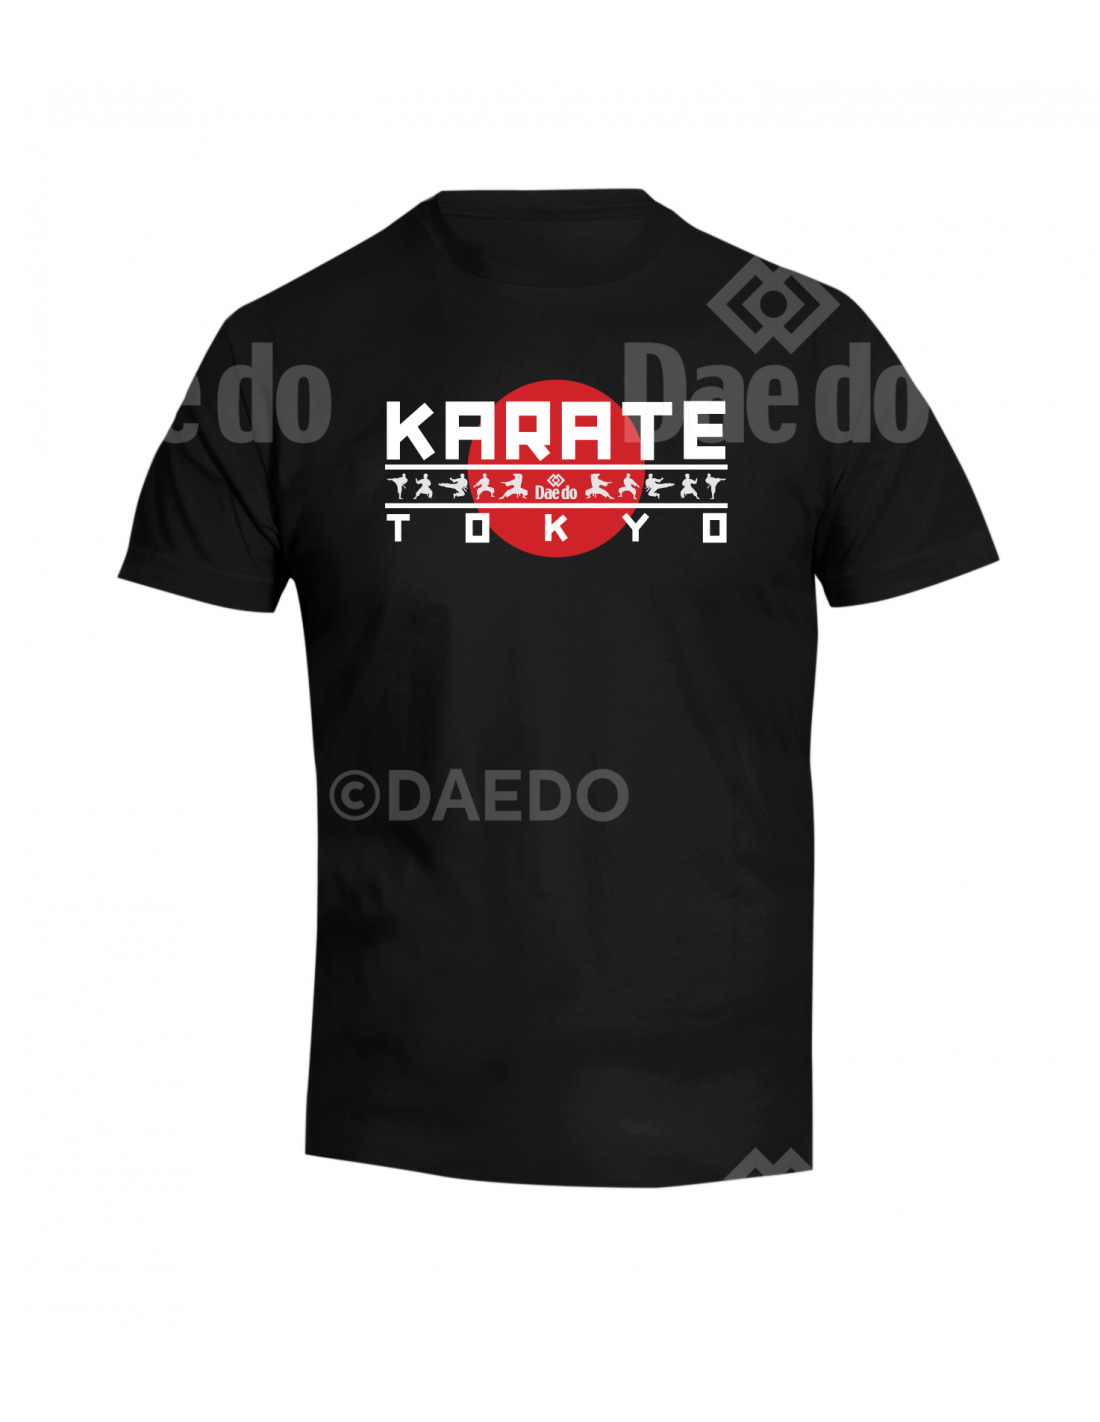 DAEDO - Karate "Tokyo" T Shirt - Small